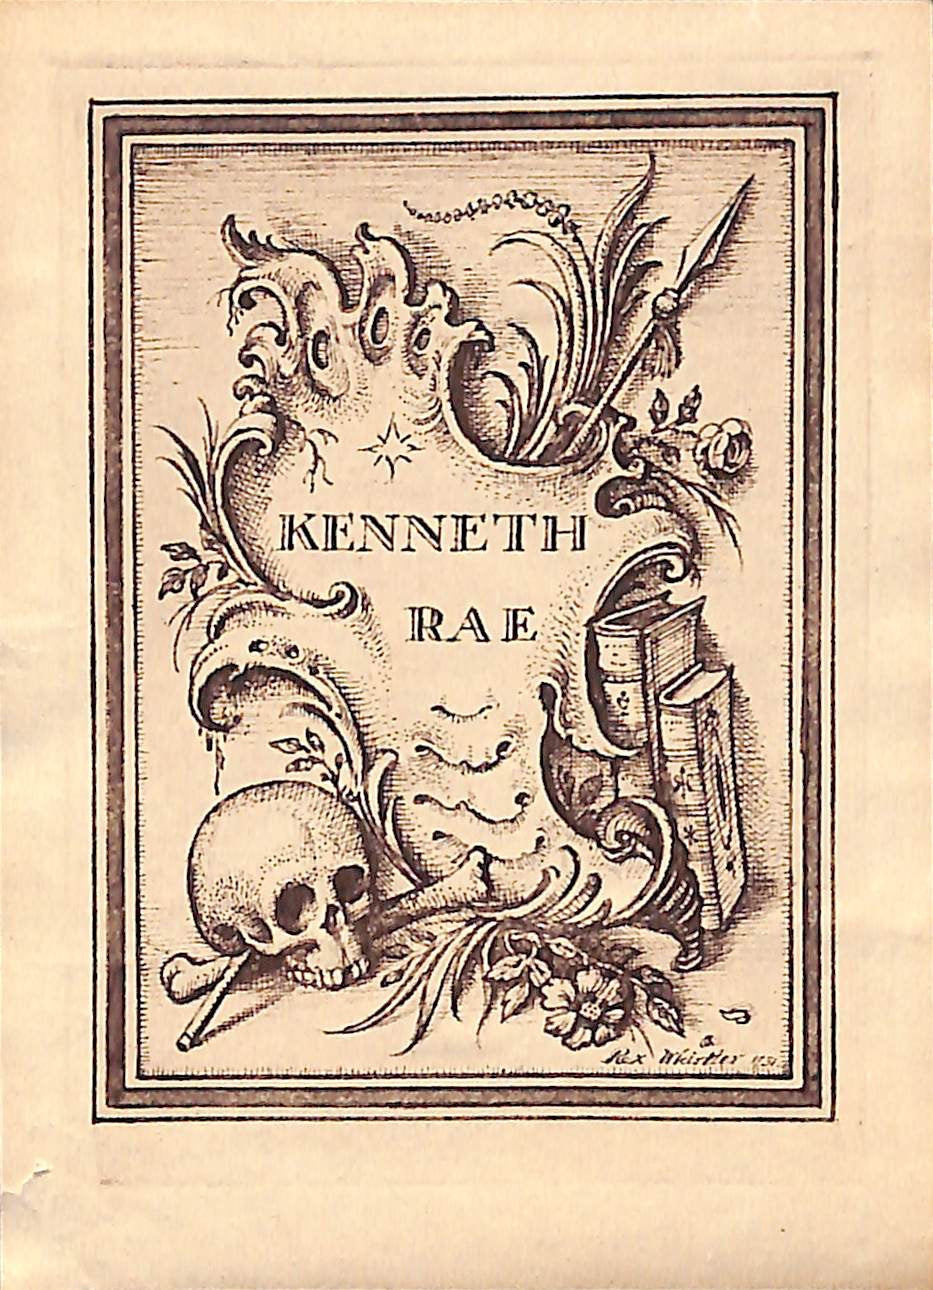 "Rex Whistler Designed 1931 Bookplate For Kenneth Rae"